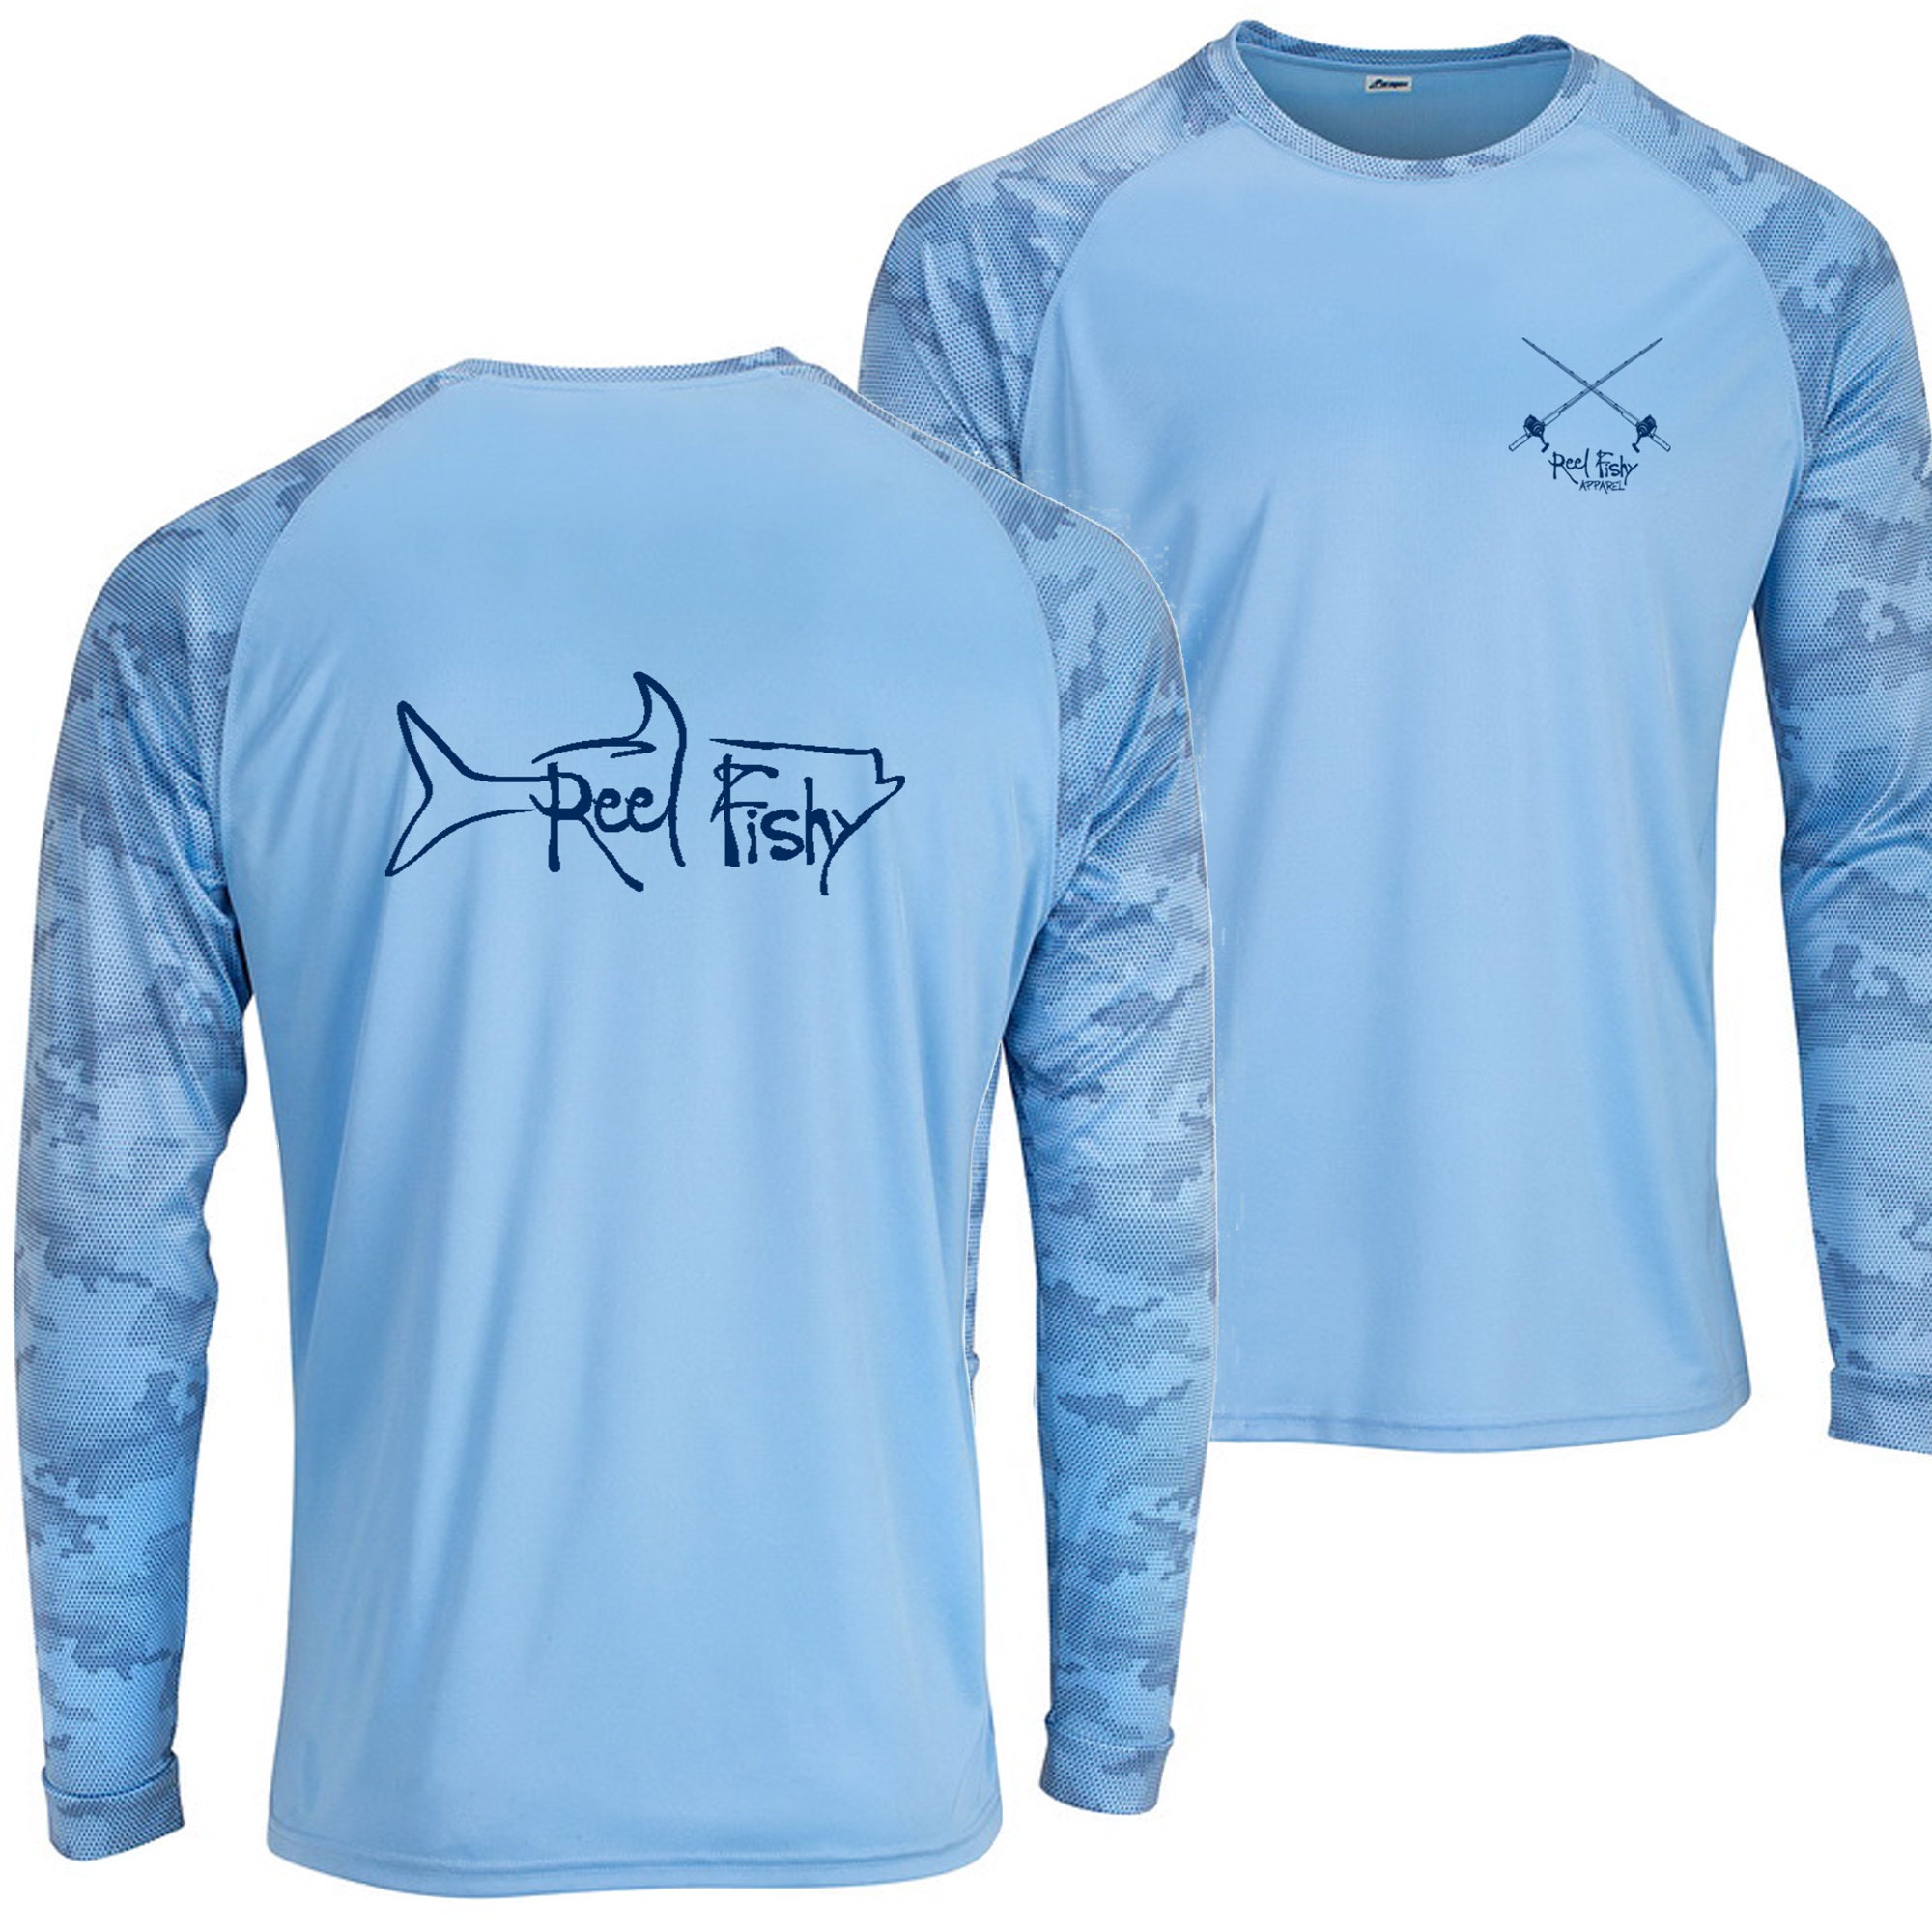 Spf Fishing Shirt -  UK